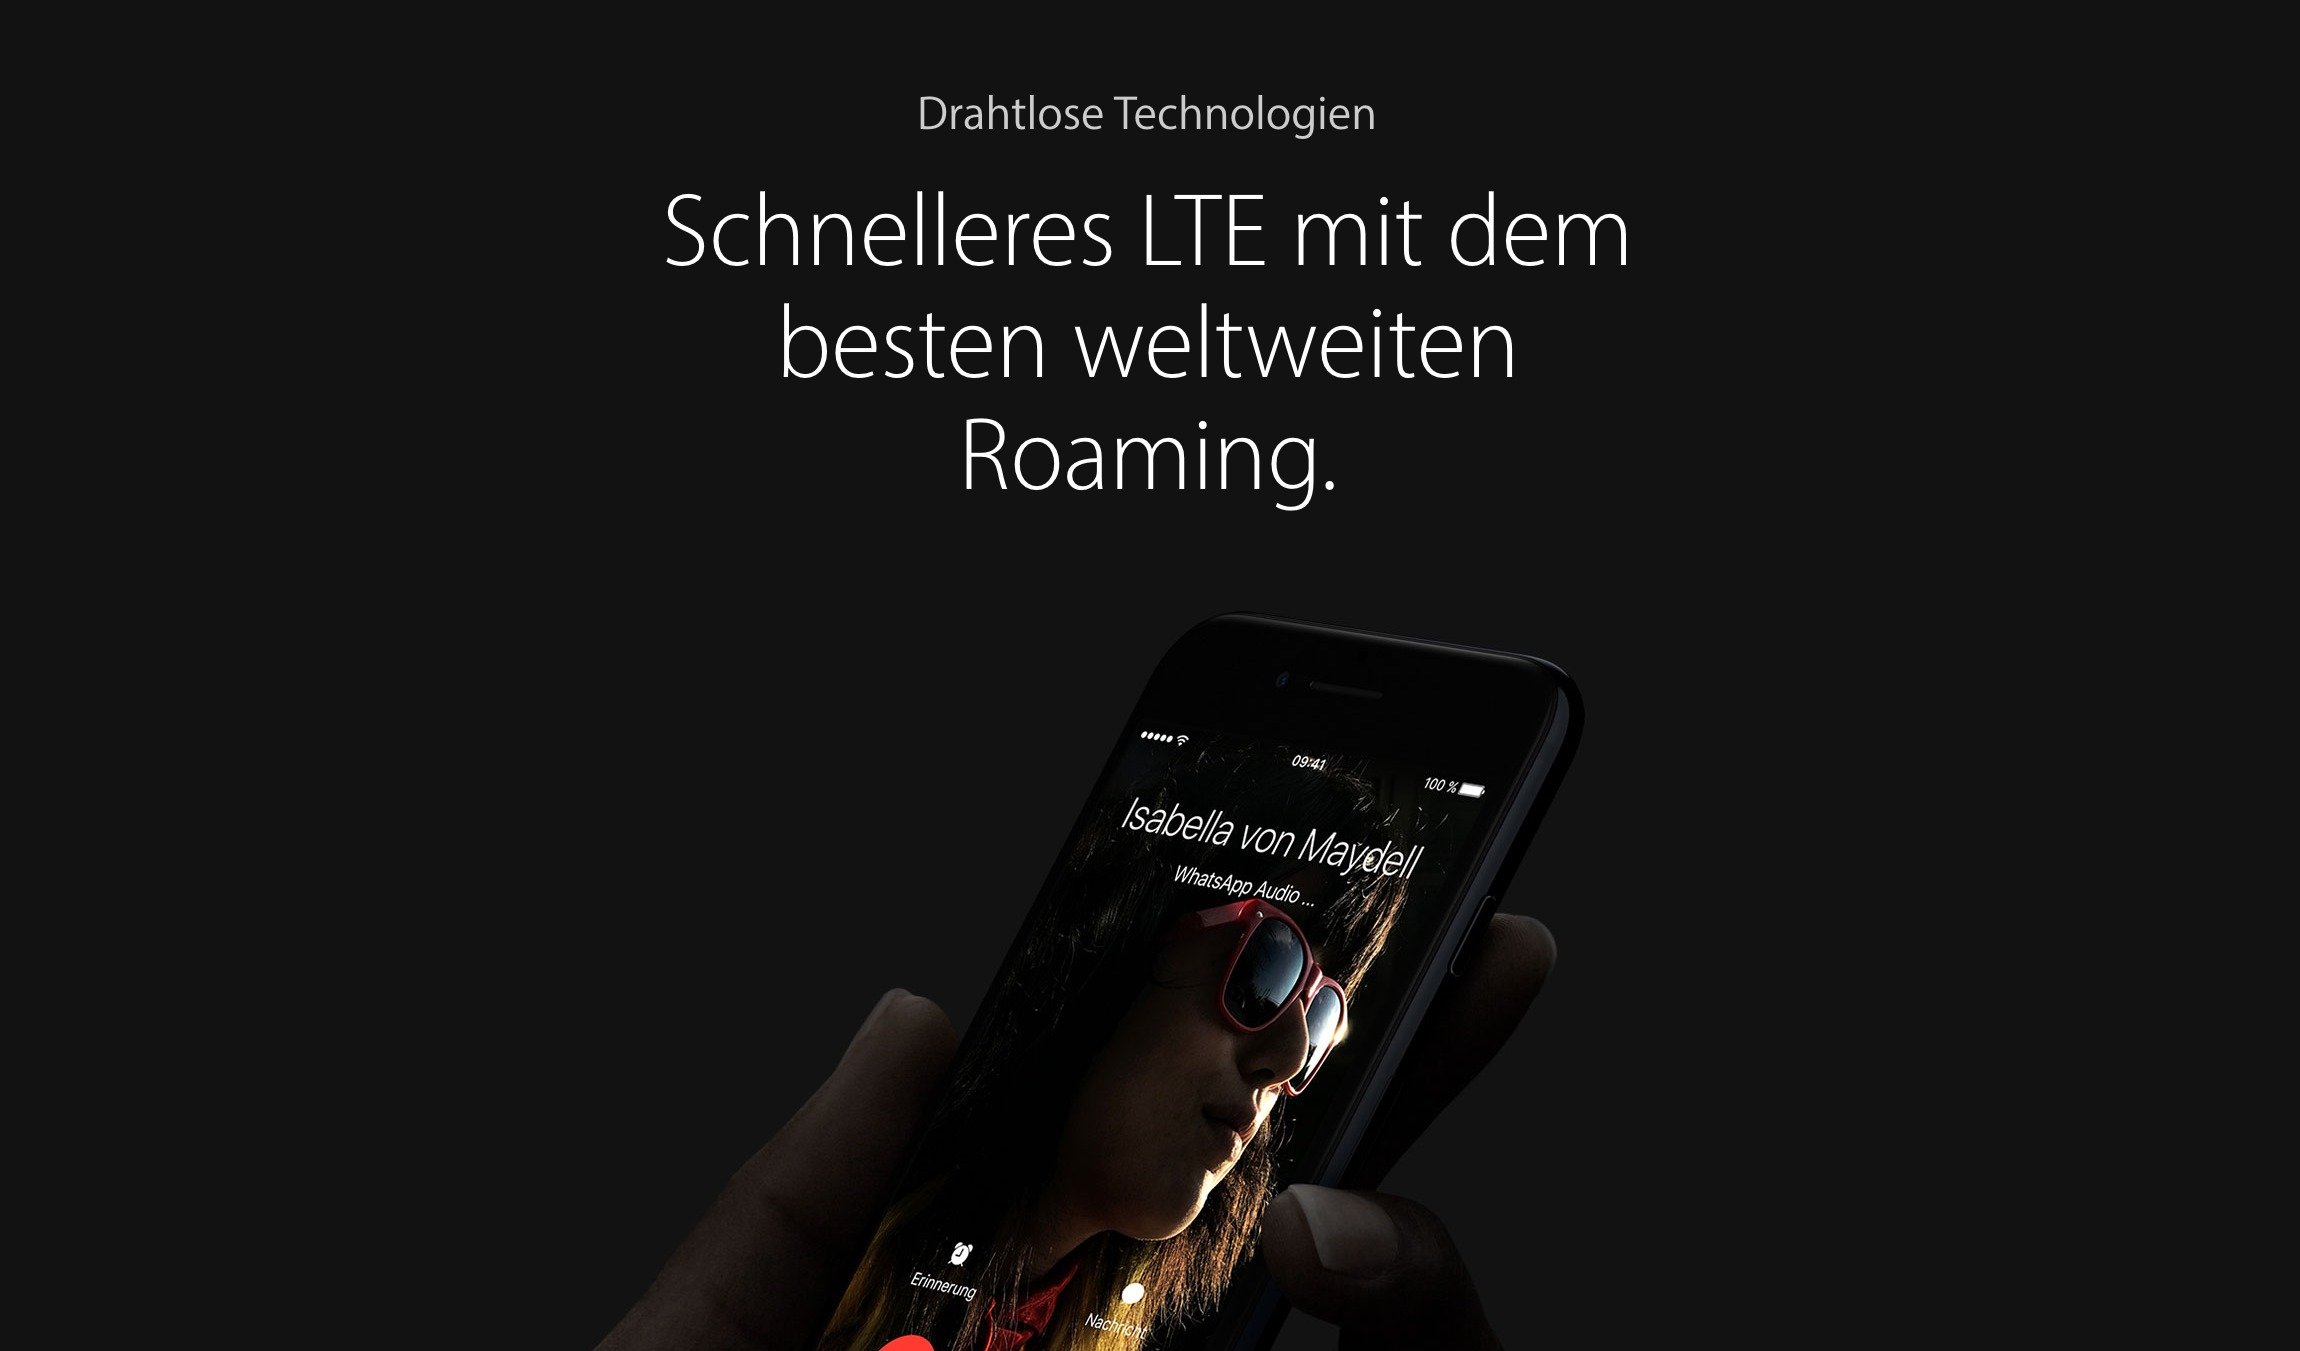 iPhone 7 mit neuem LTE-Chip: LTE-Advanced Cat.9 bis 450 Mbit/s 2